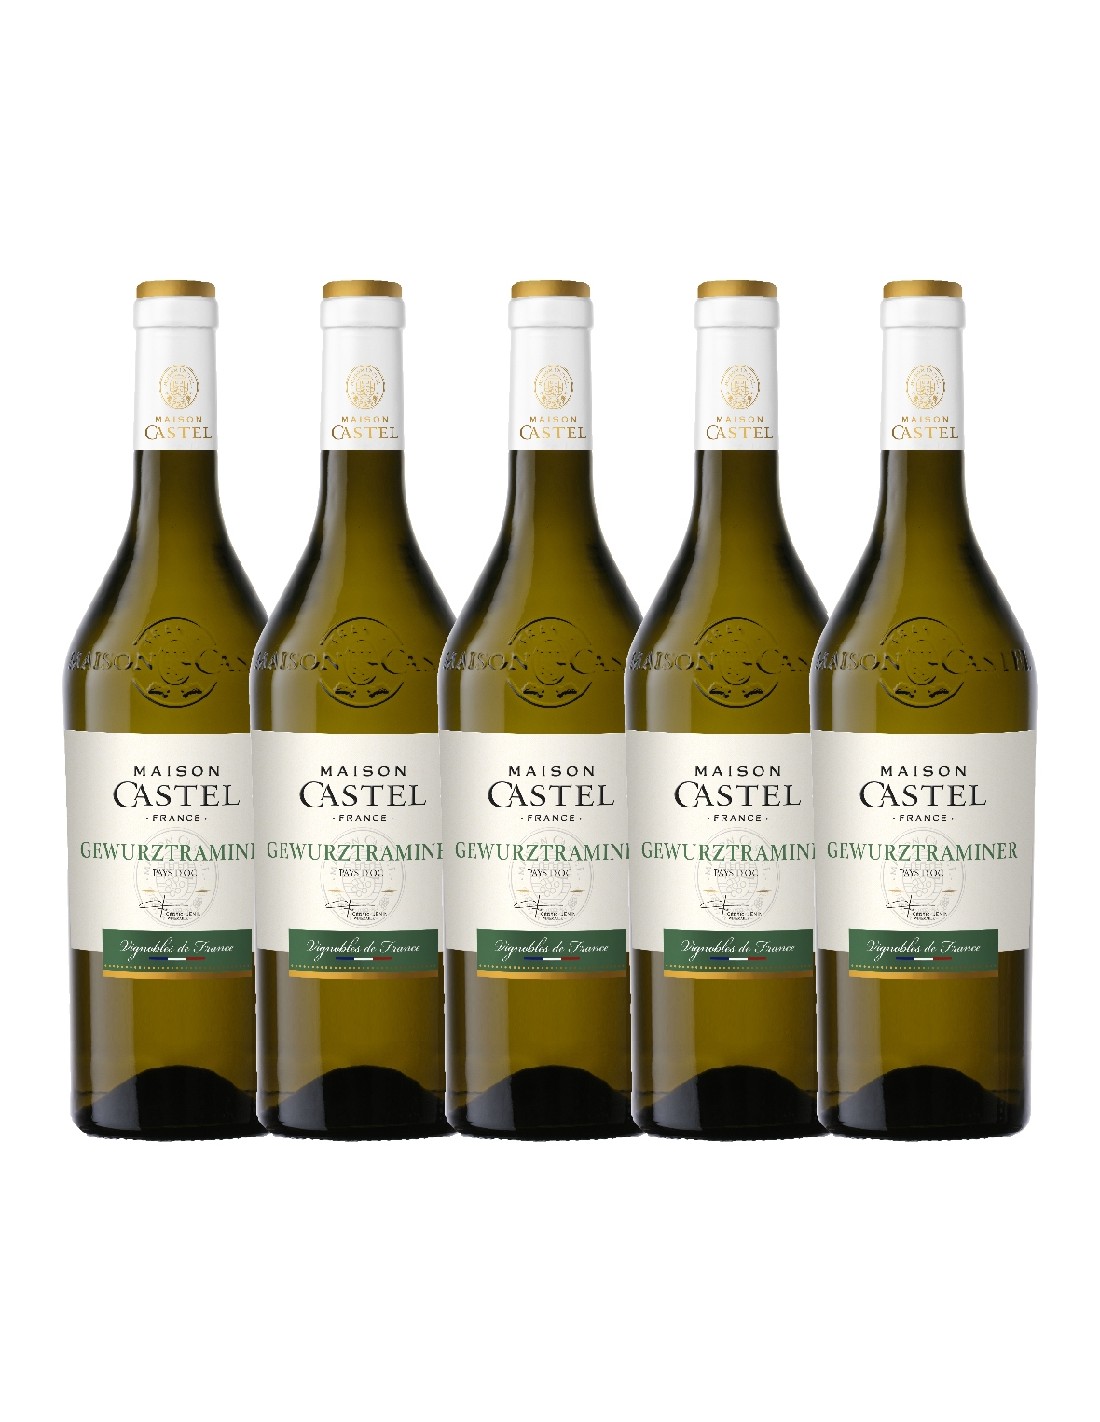 Pachet 5 sticle Vin alb, Gewürztraminer, Maison Castel Pays d’Oc, 0.75L, 12.8% alc., Franta alcooldiscount.ro